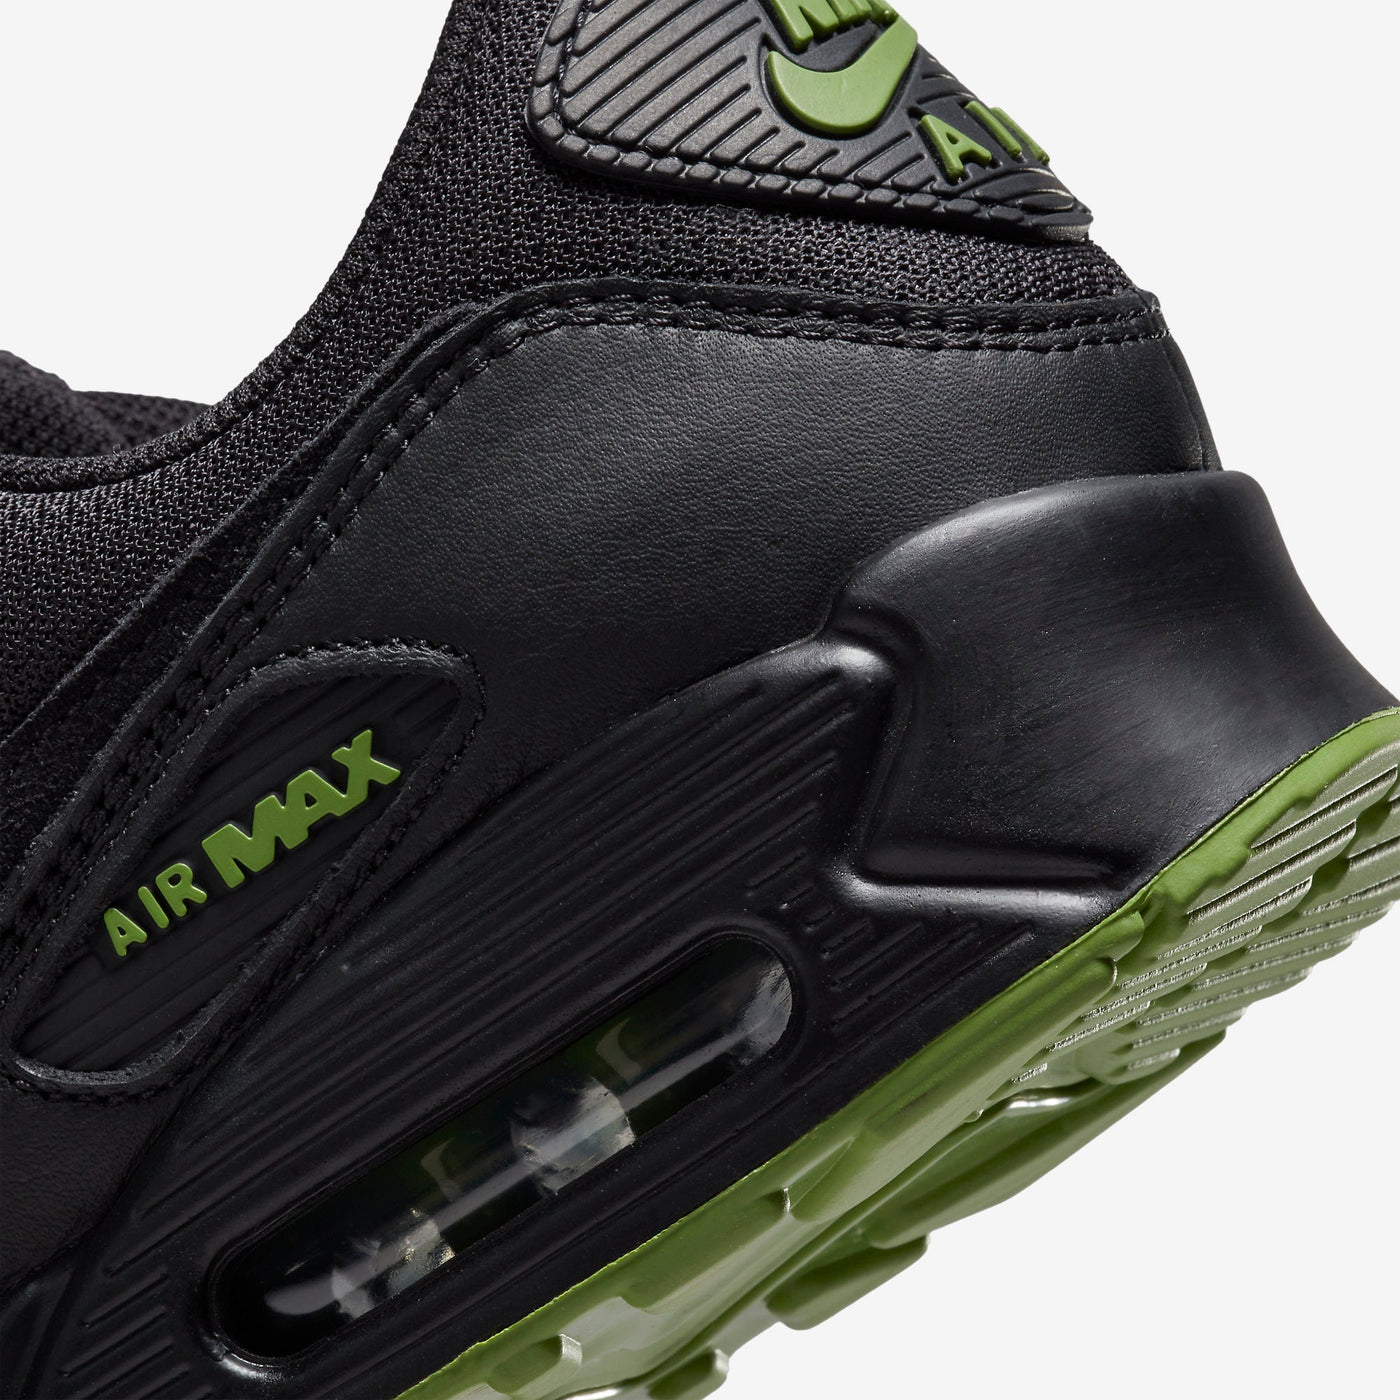 DQ4071-005 Nike Air Max 90 Black Chlorophyll Men's